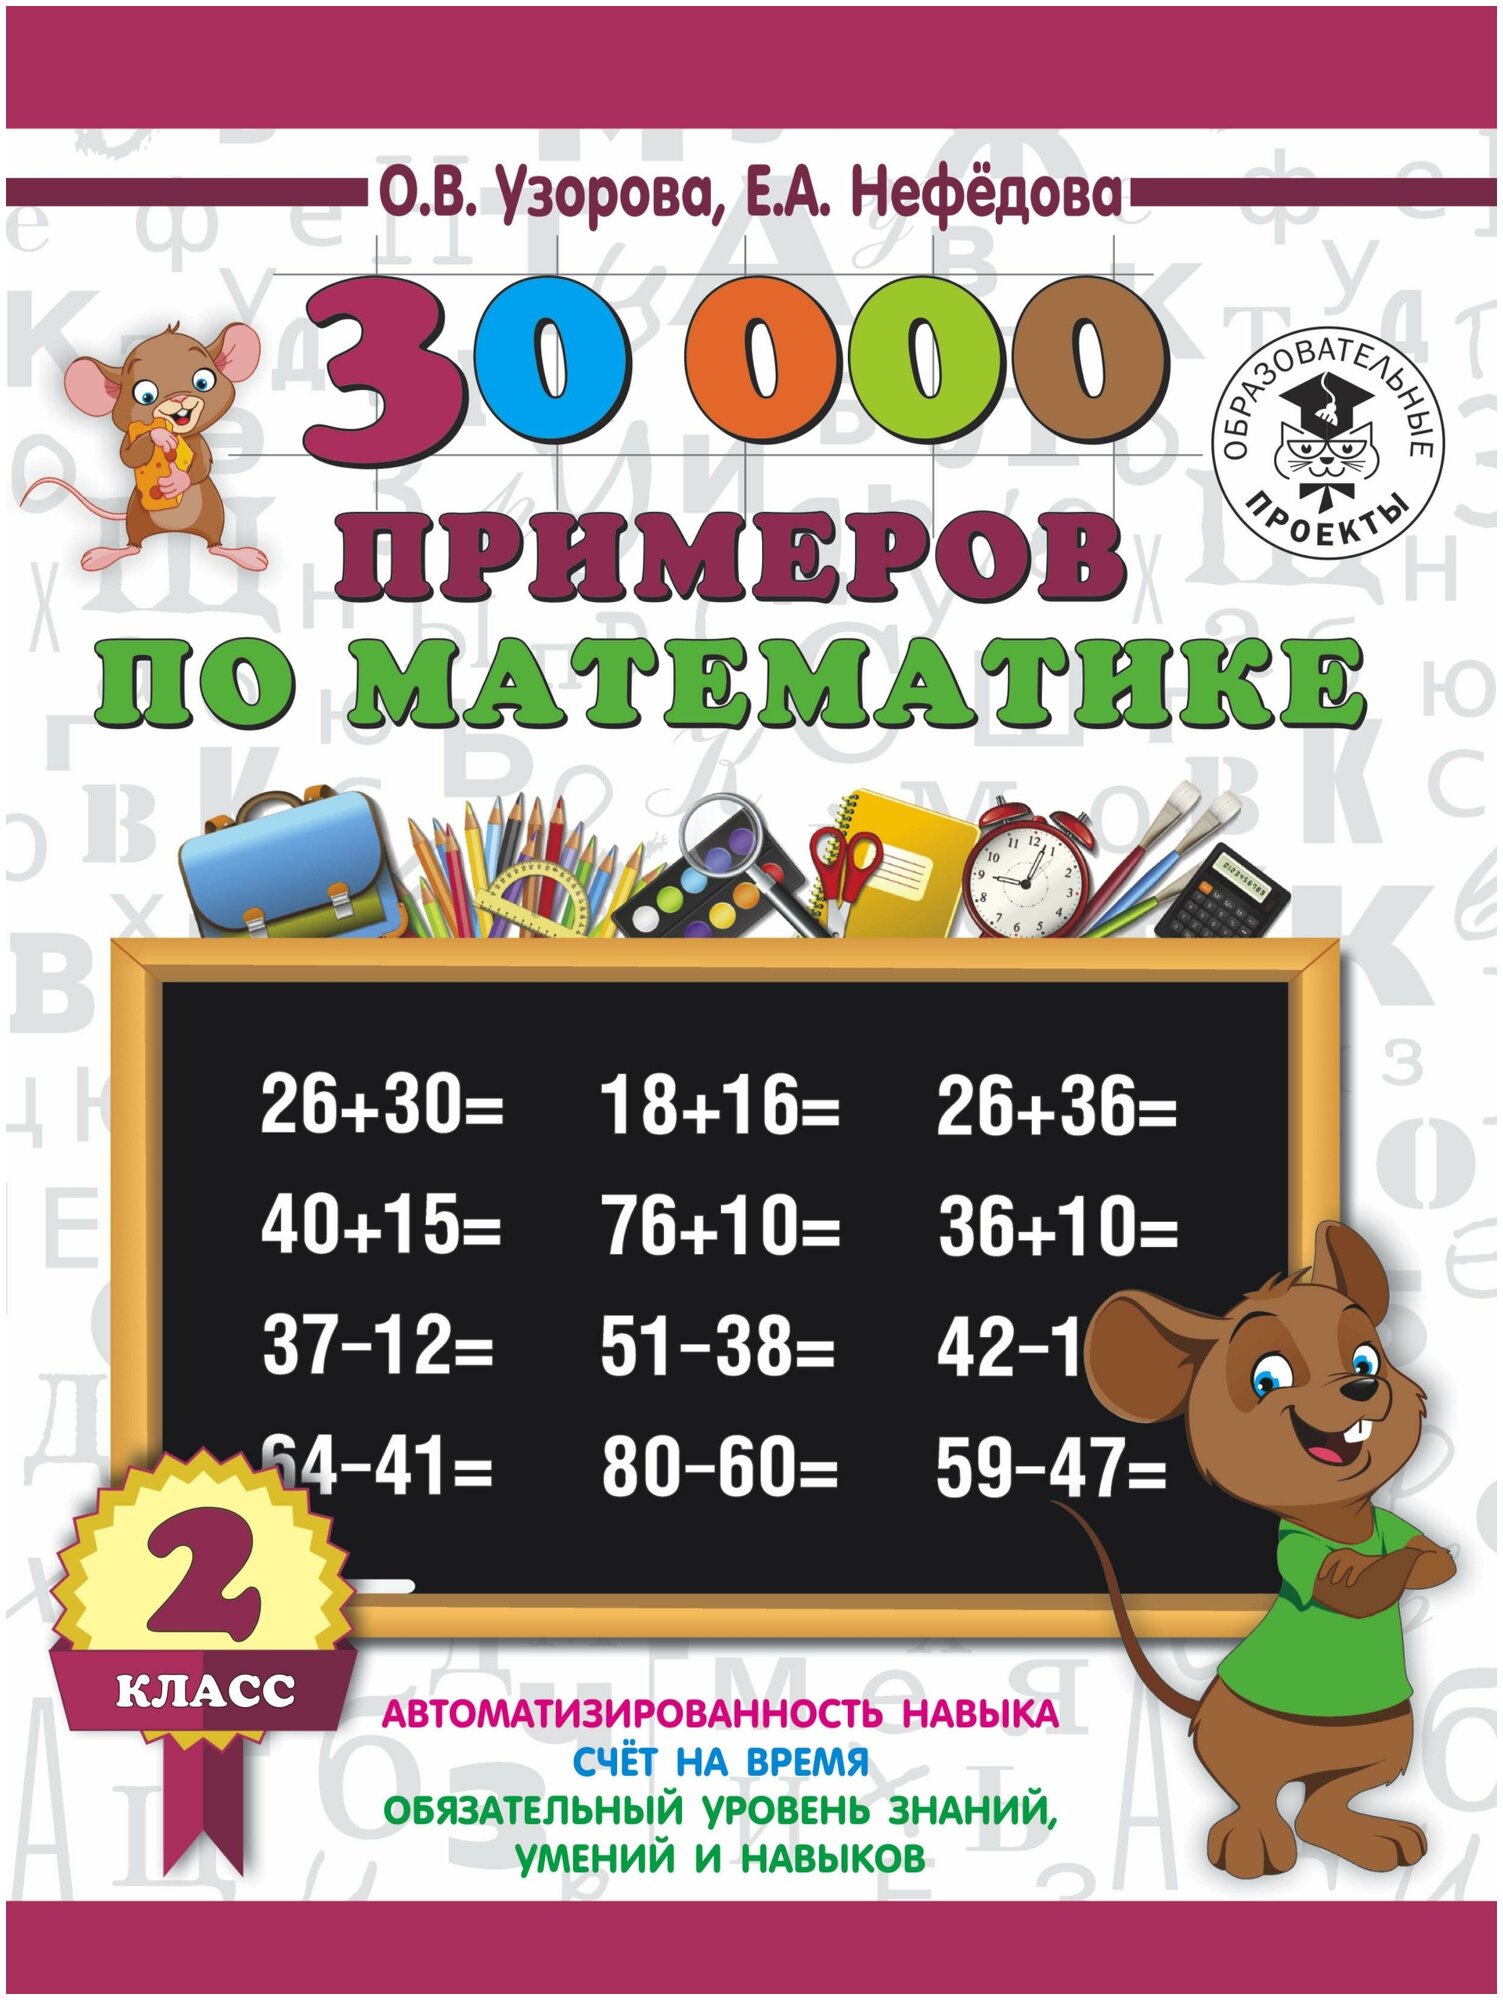 Математика. 2 класс. 30 000 примеров - фото №2